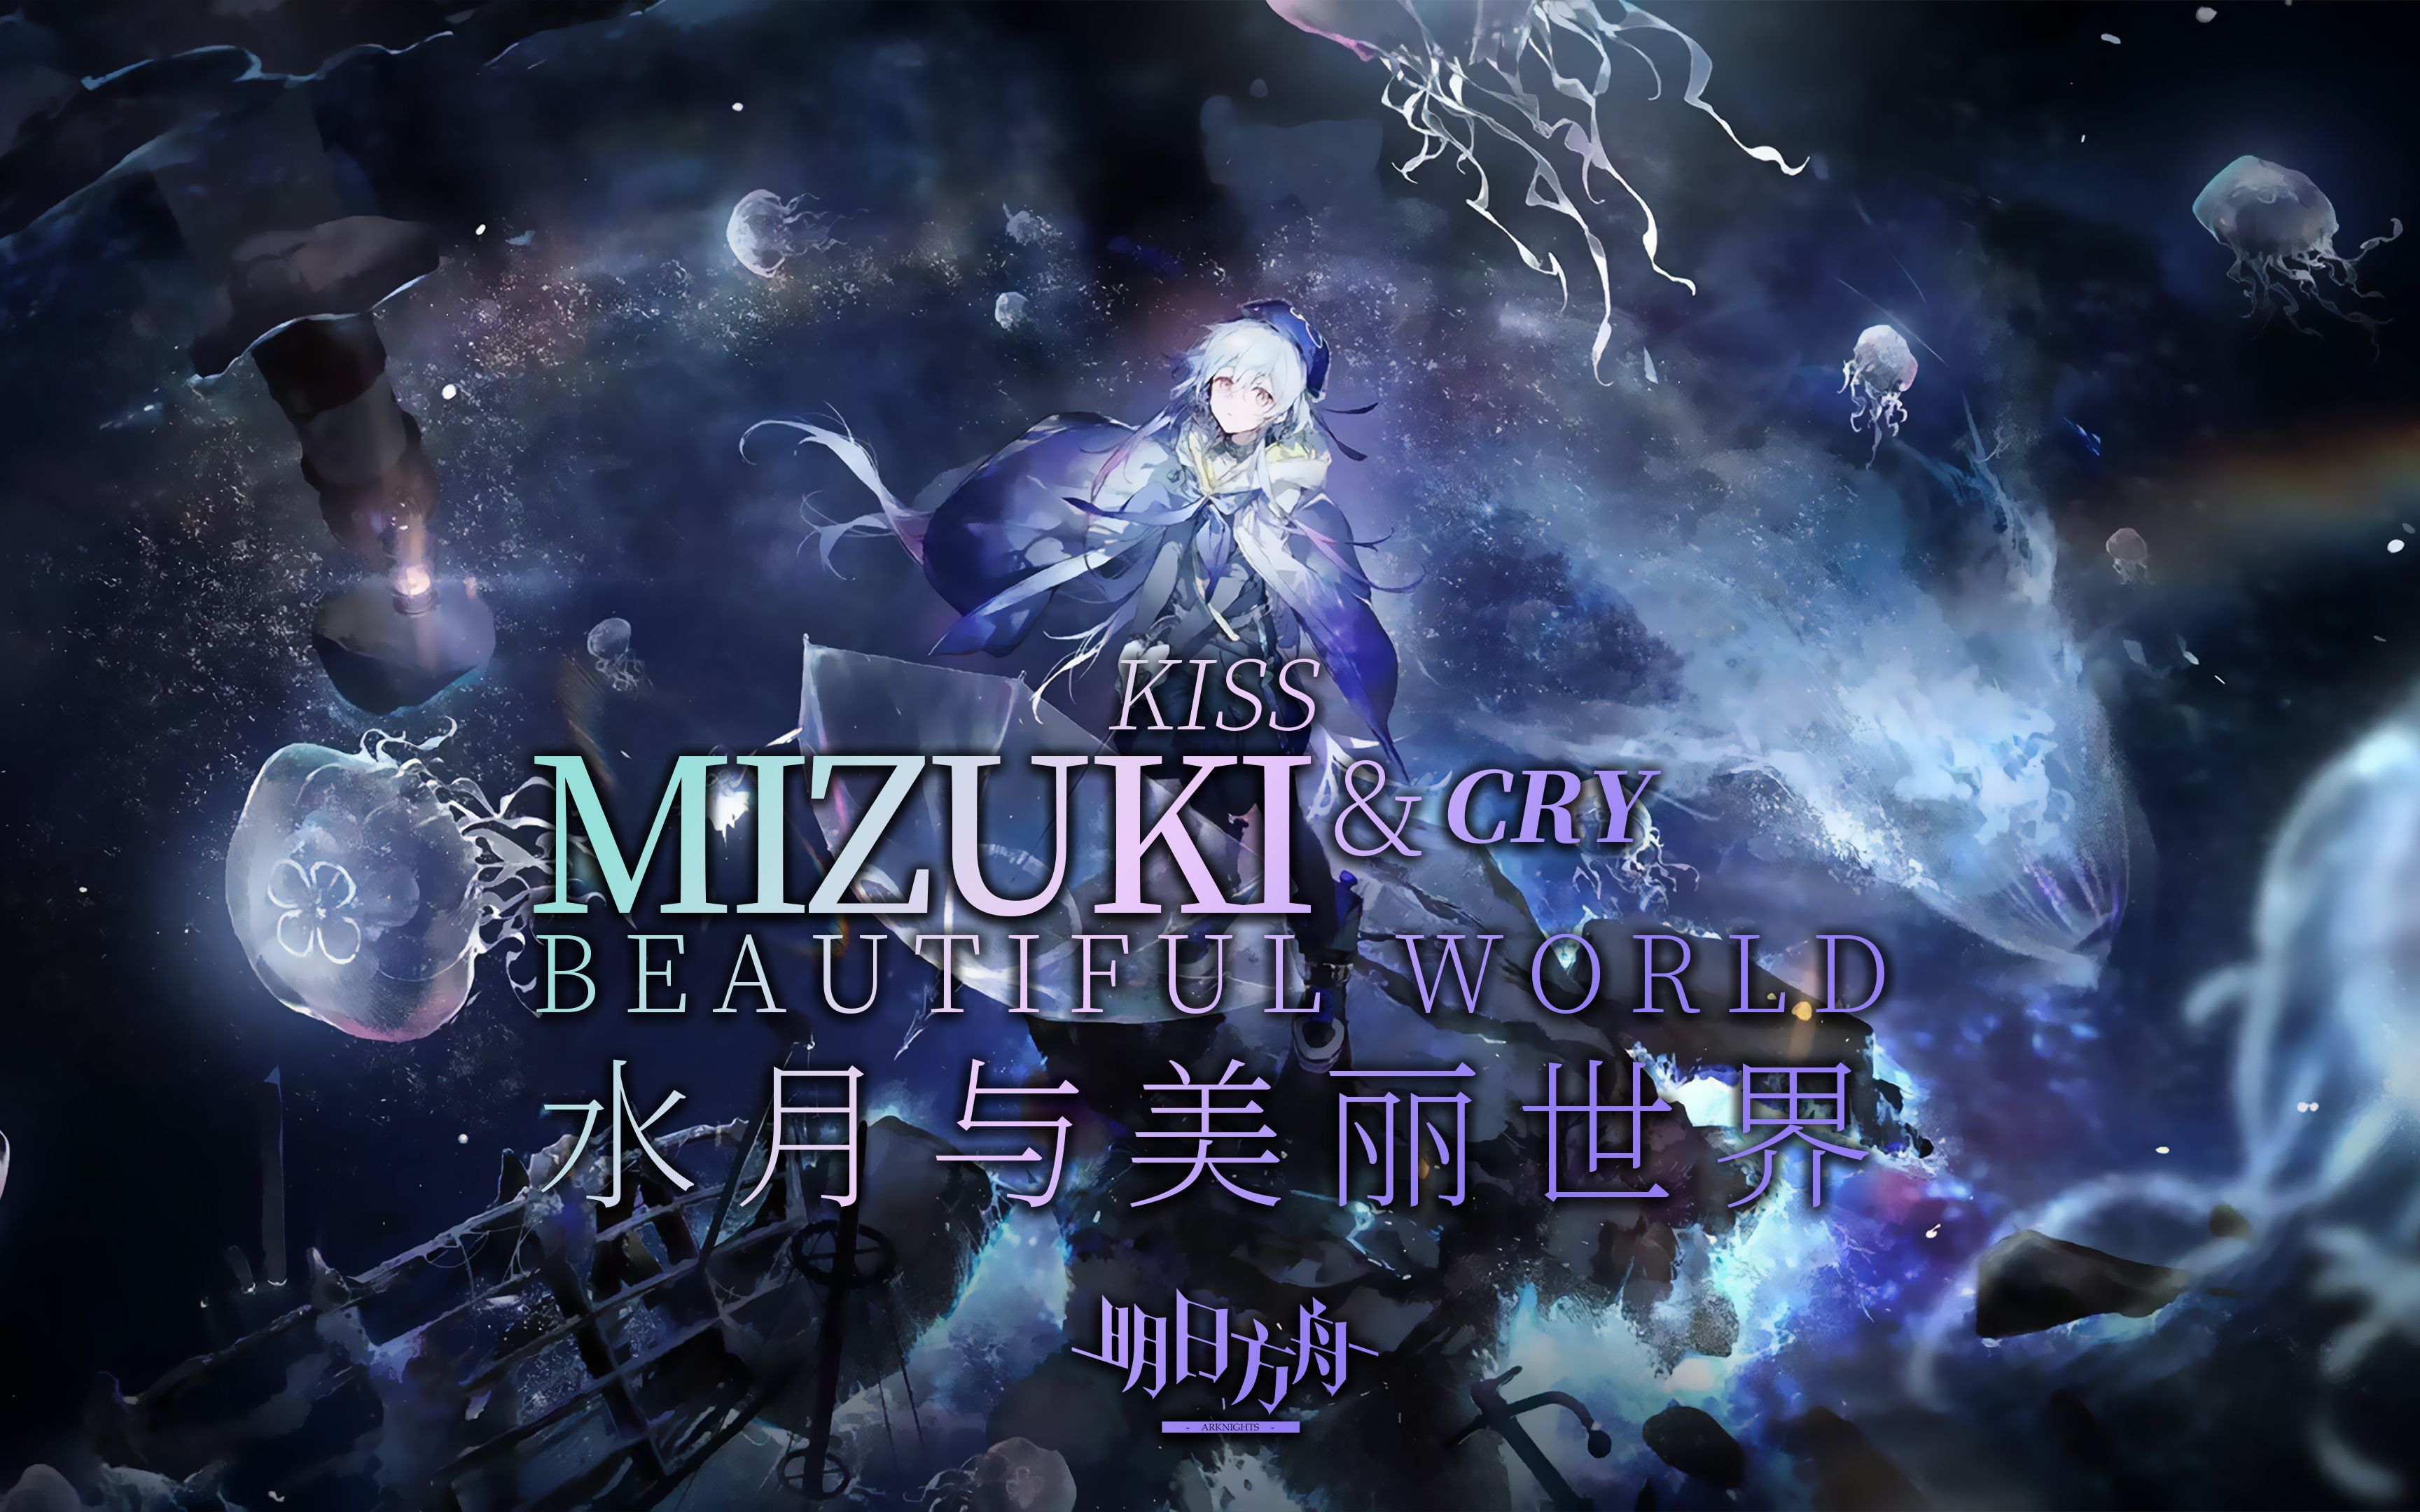 【AI水月】水月与美丽世界 Beautiful World 1.0-MIzuki&KISS&CRY 【明日方舟AI翻唱】【soVITS-Diff-svc】